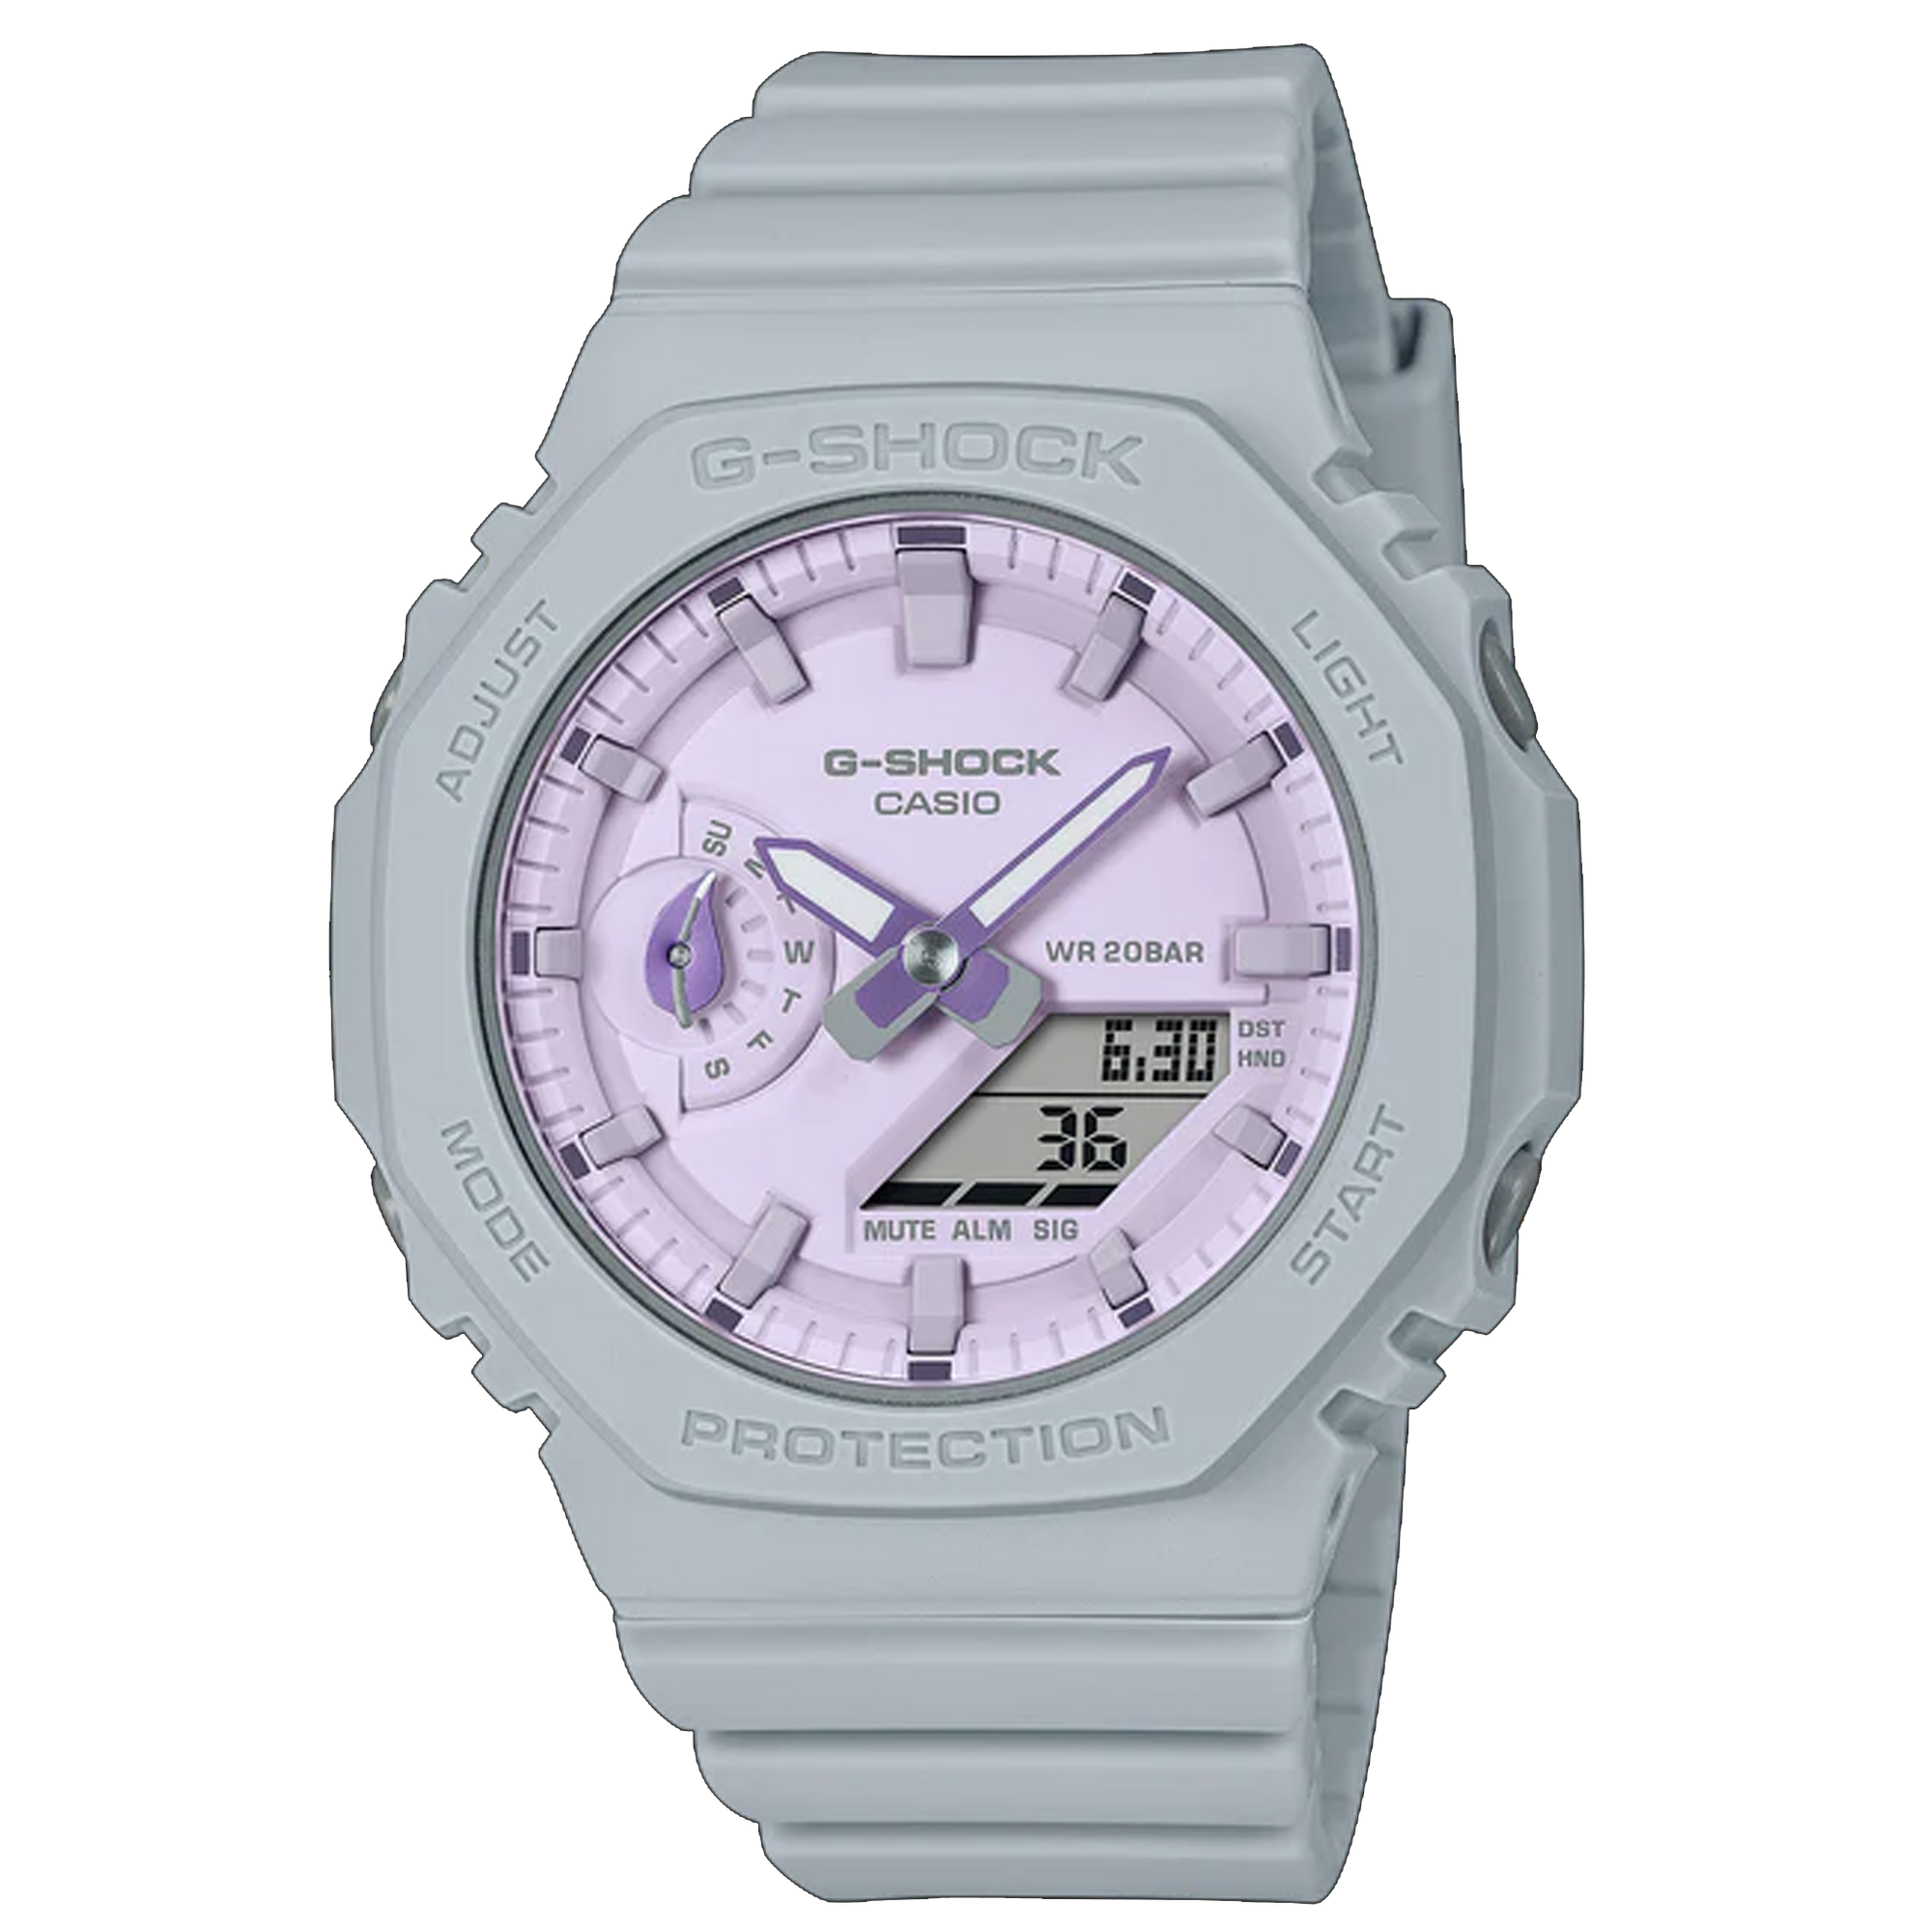 Casio G-Shock - At The Halifax Watch Company - sale - sale